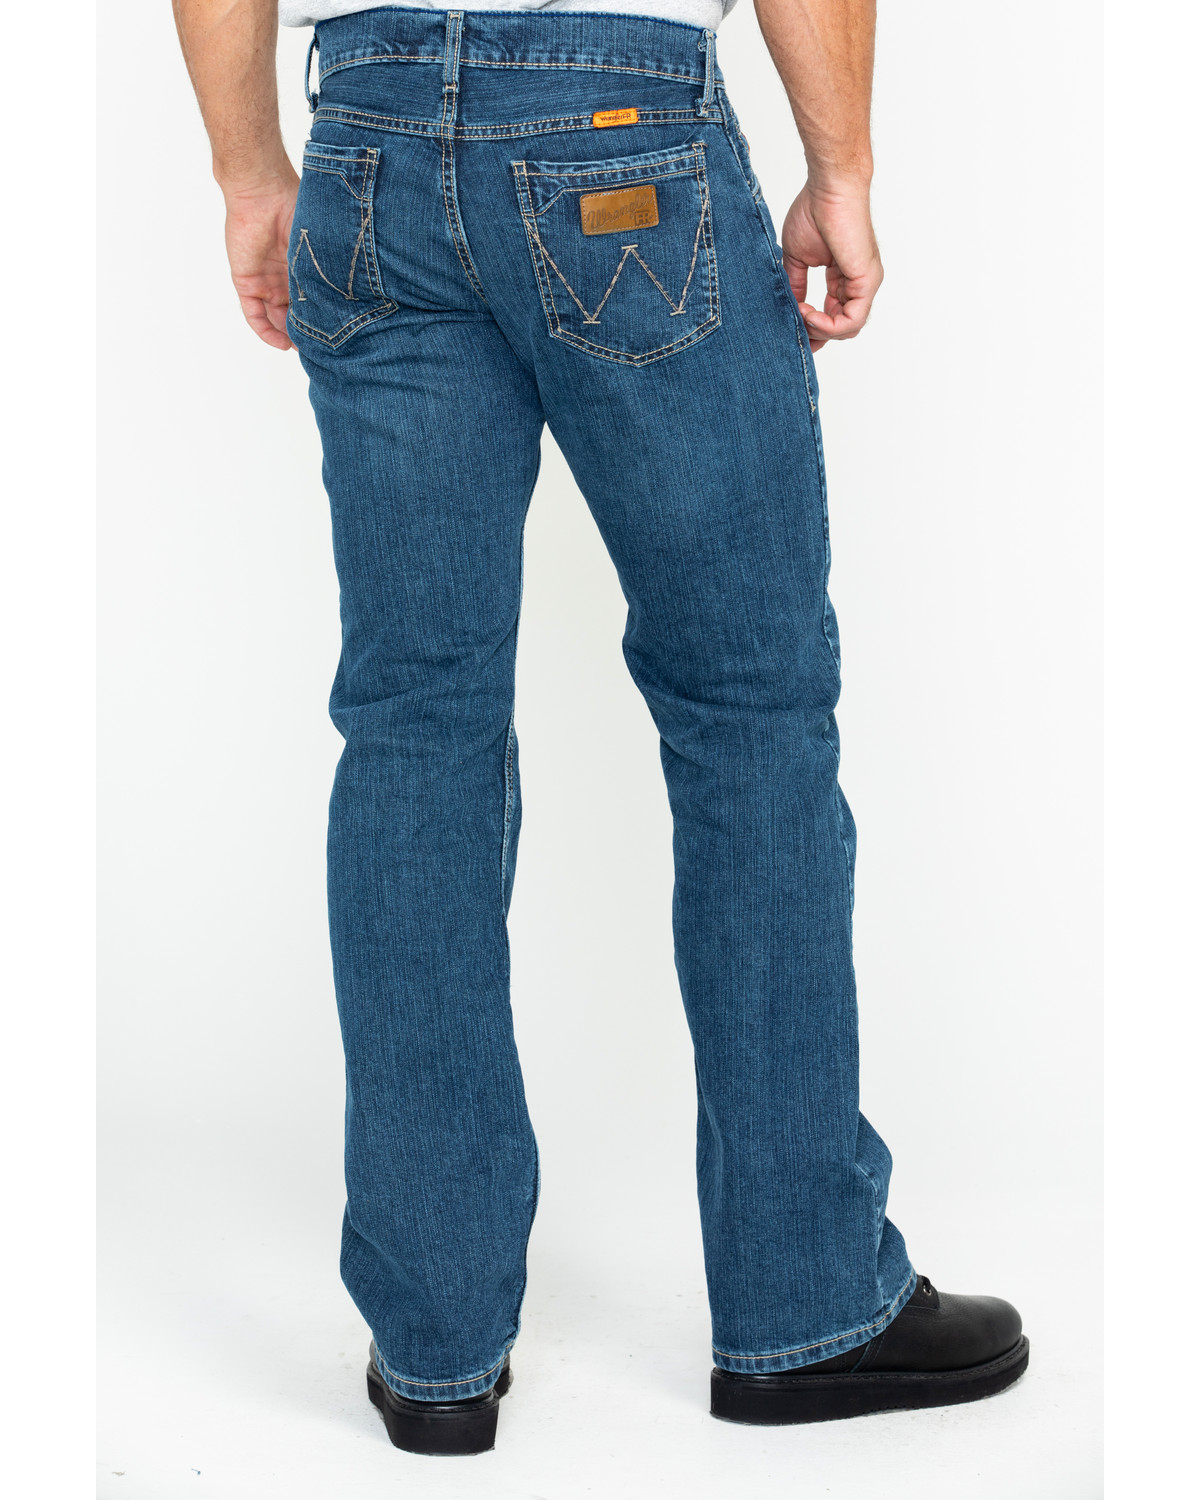 Rückschnitt Vergleichbar Kies wrangler retro jeans mens Kieselstein